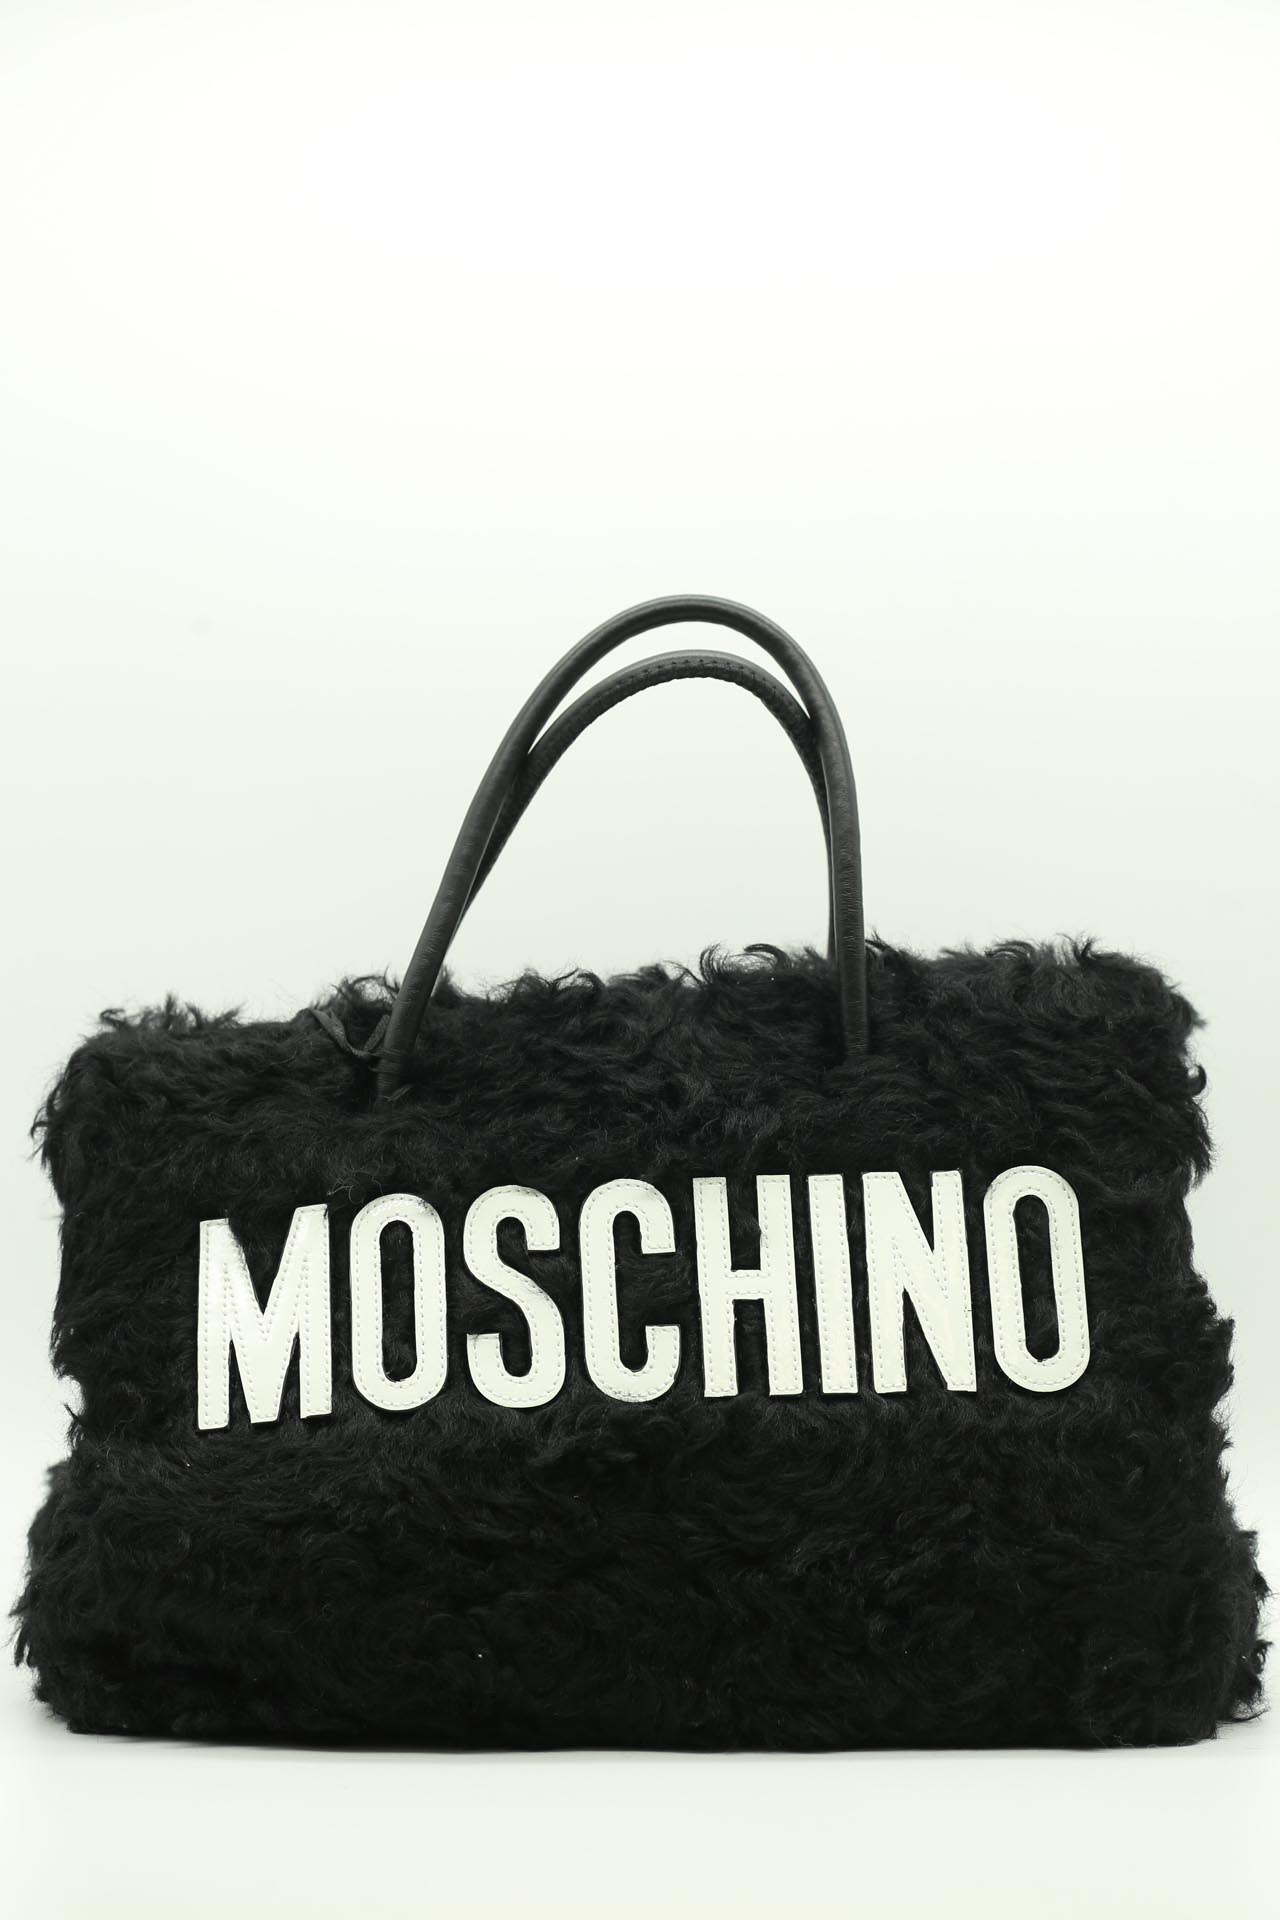 Moschino, Bag